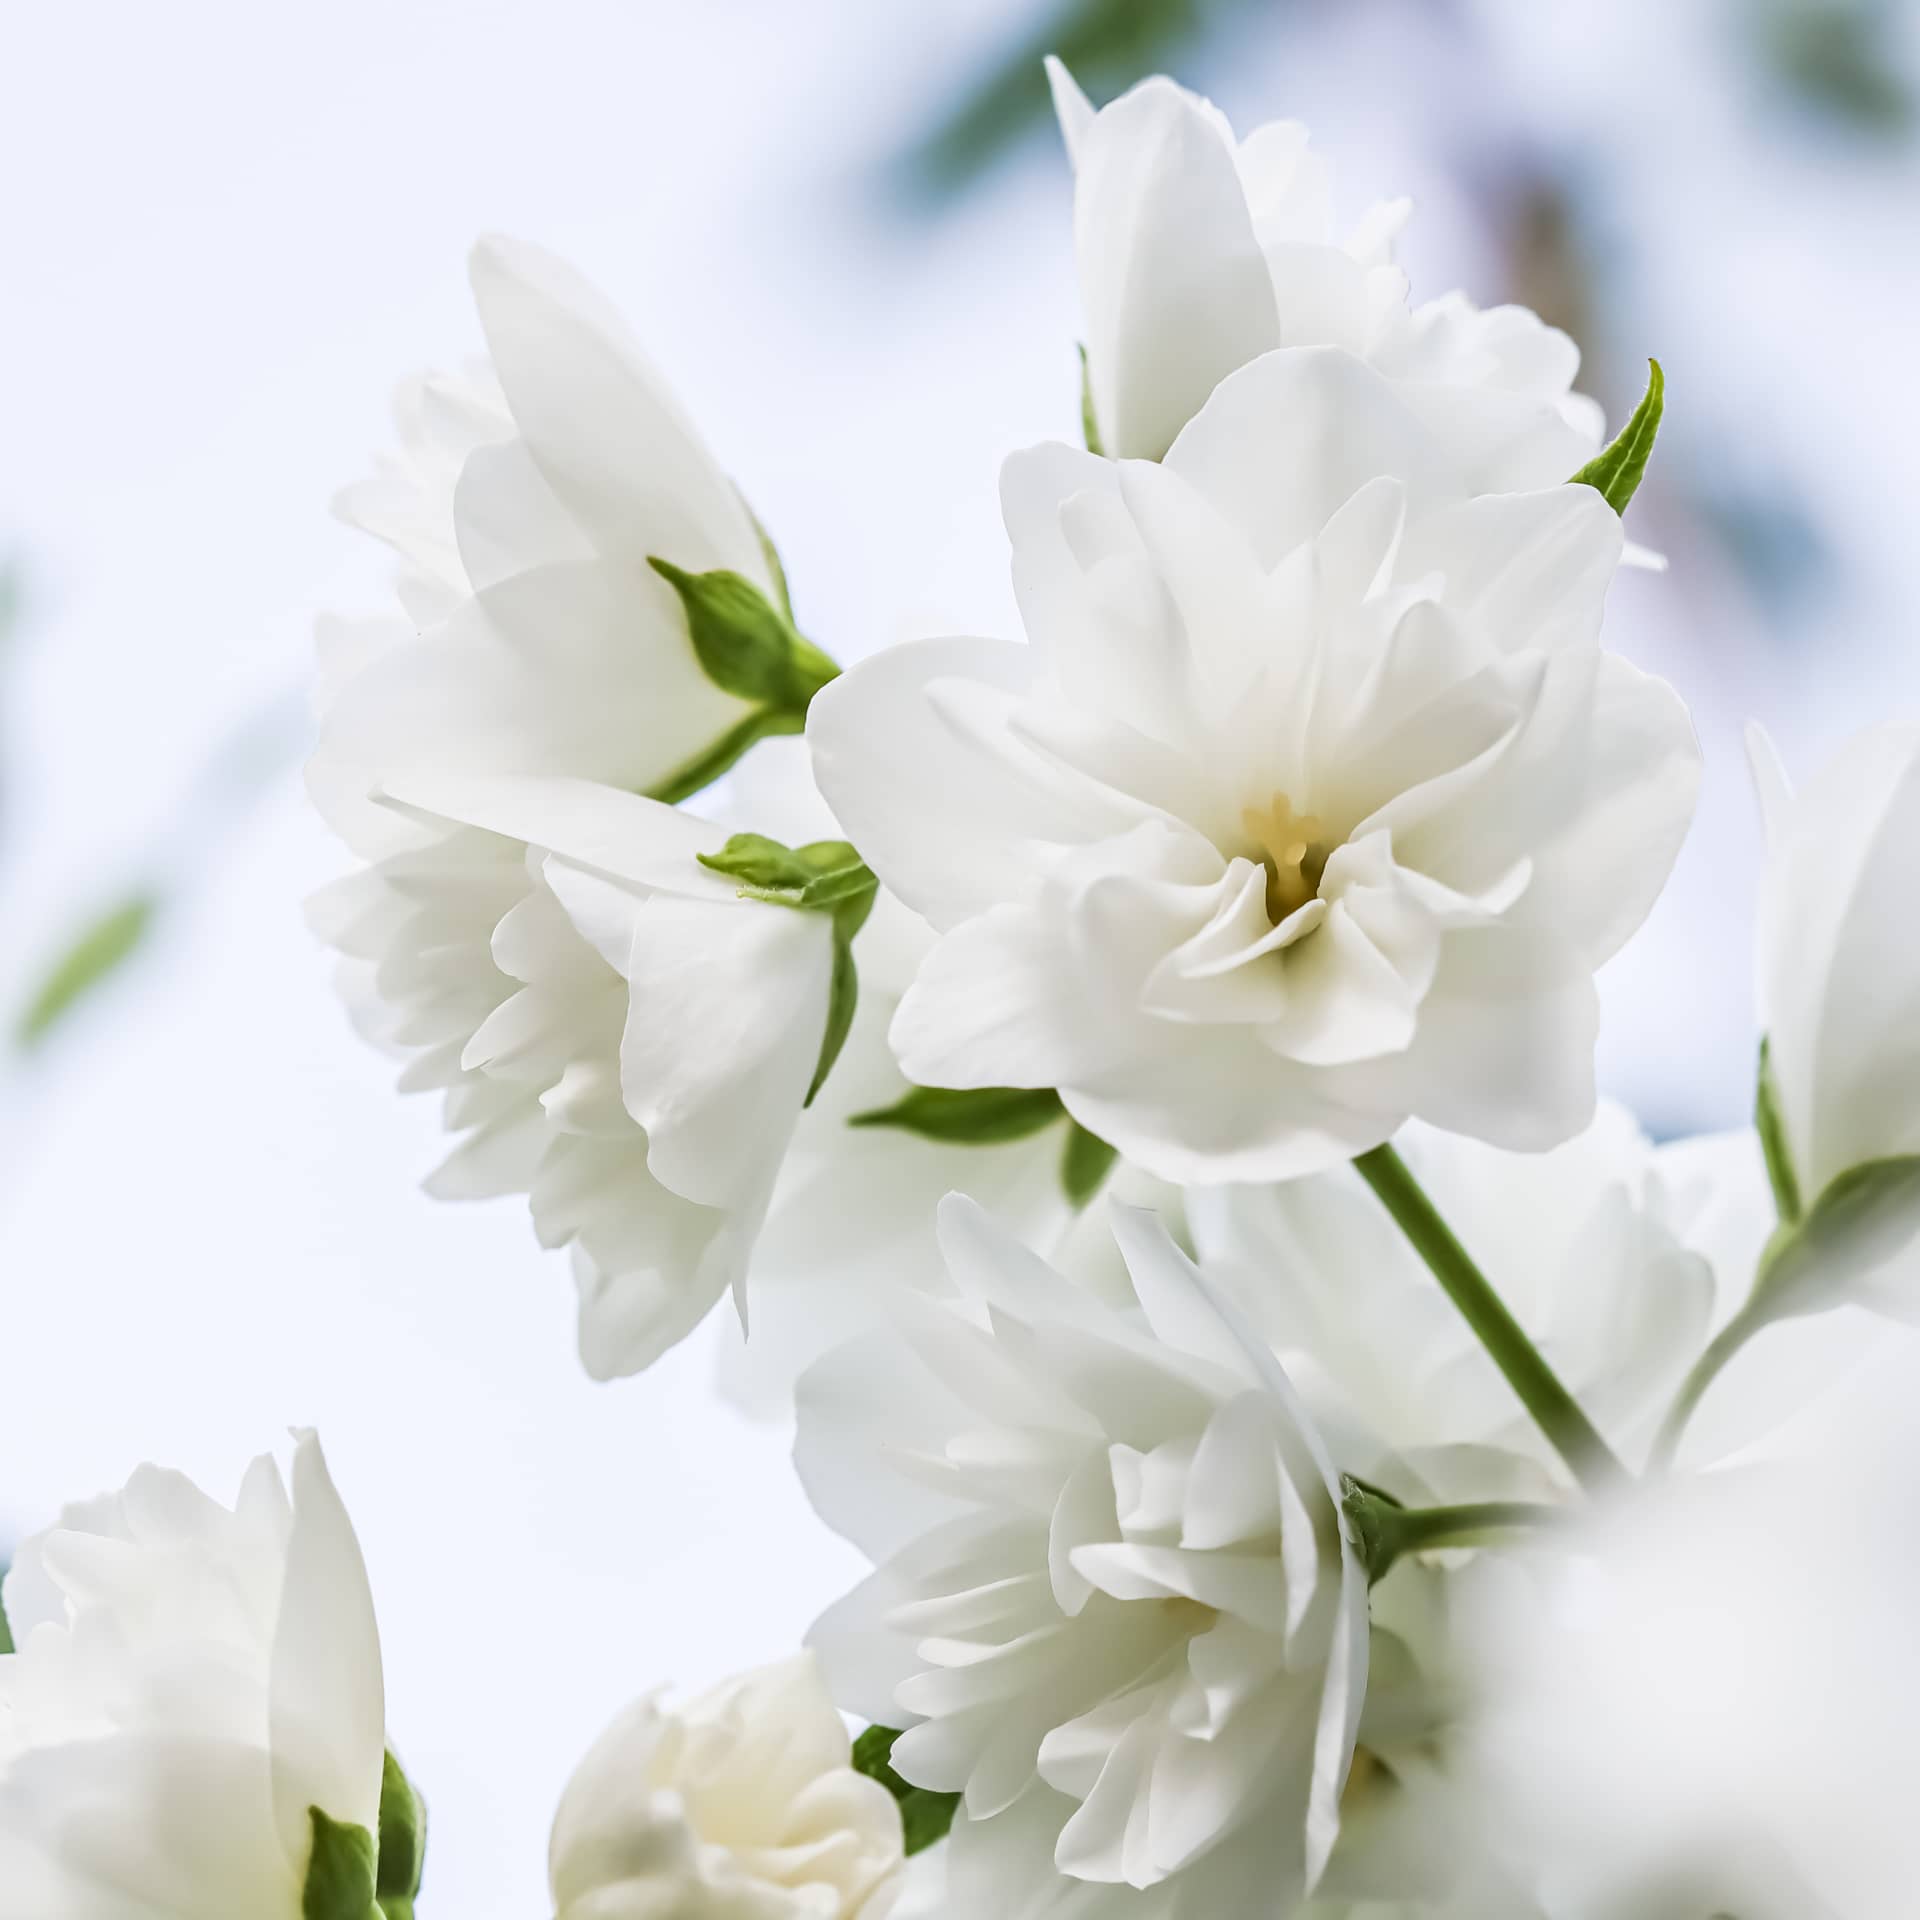 Floral background white terry jasmine flower petals macro flowers backdrop